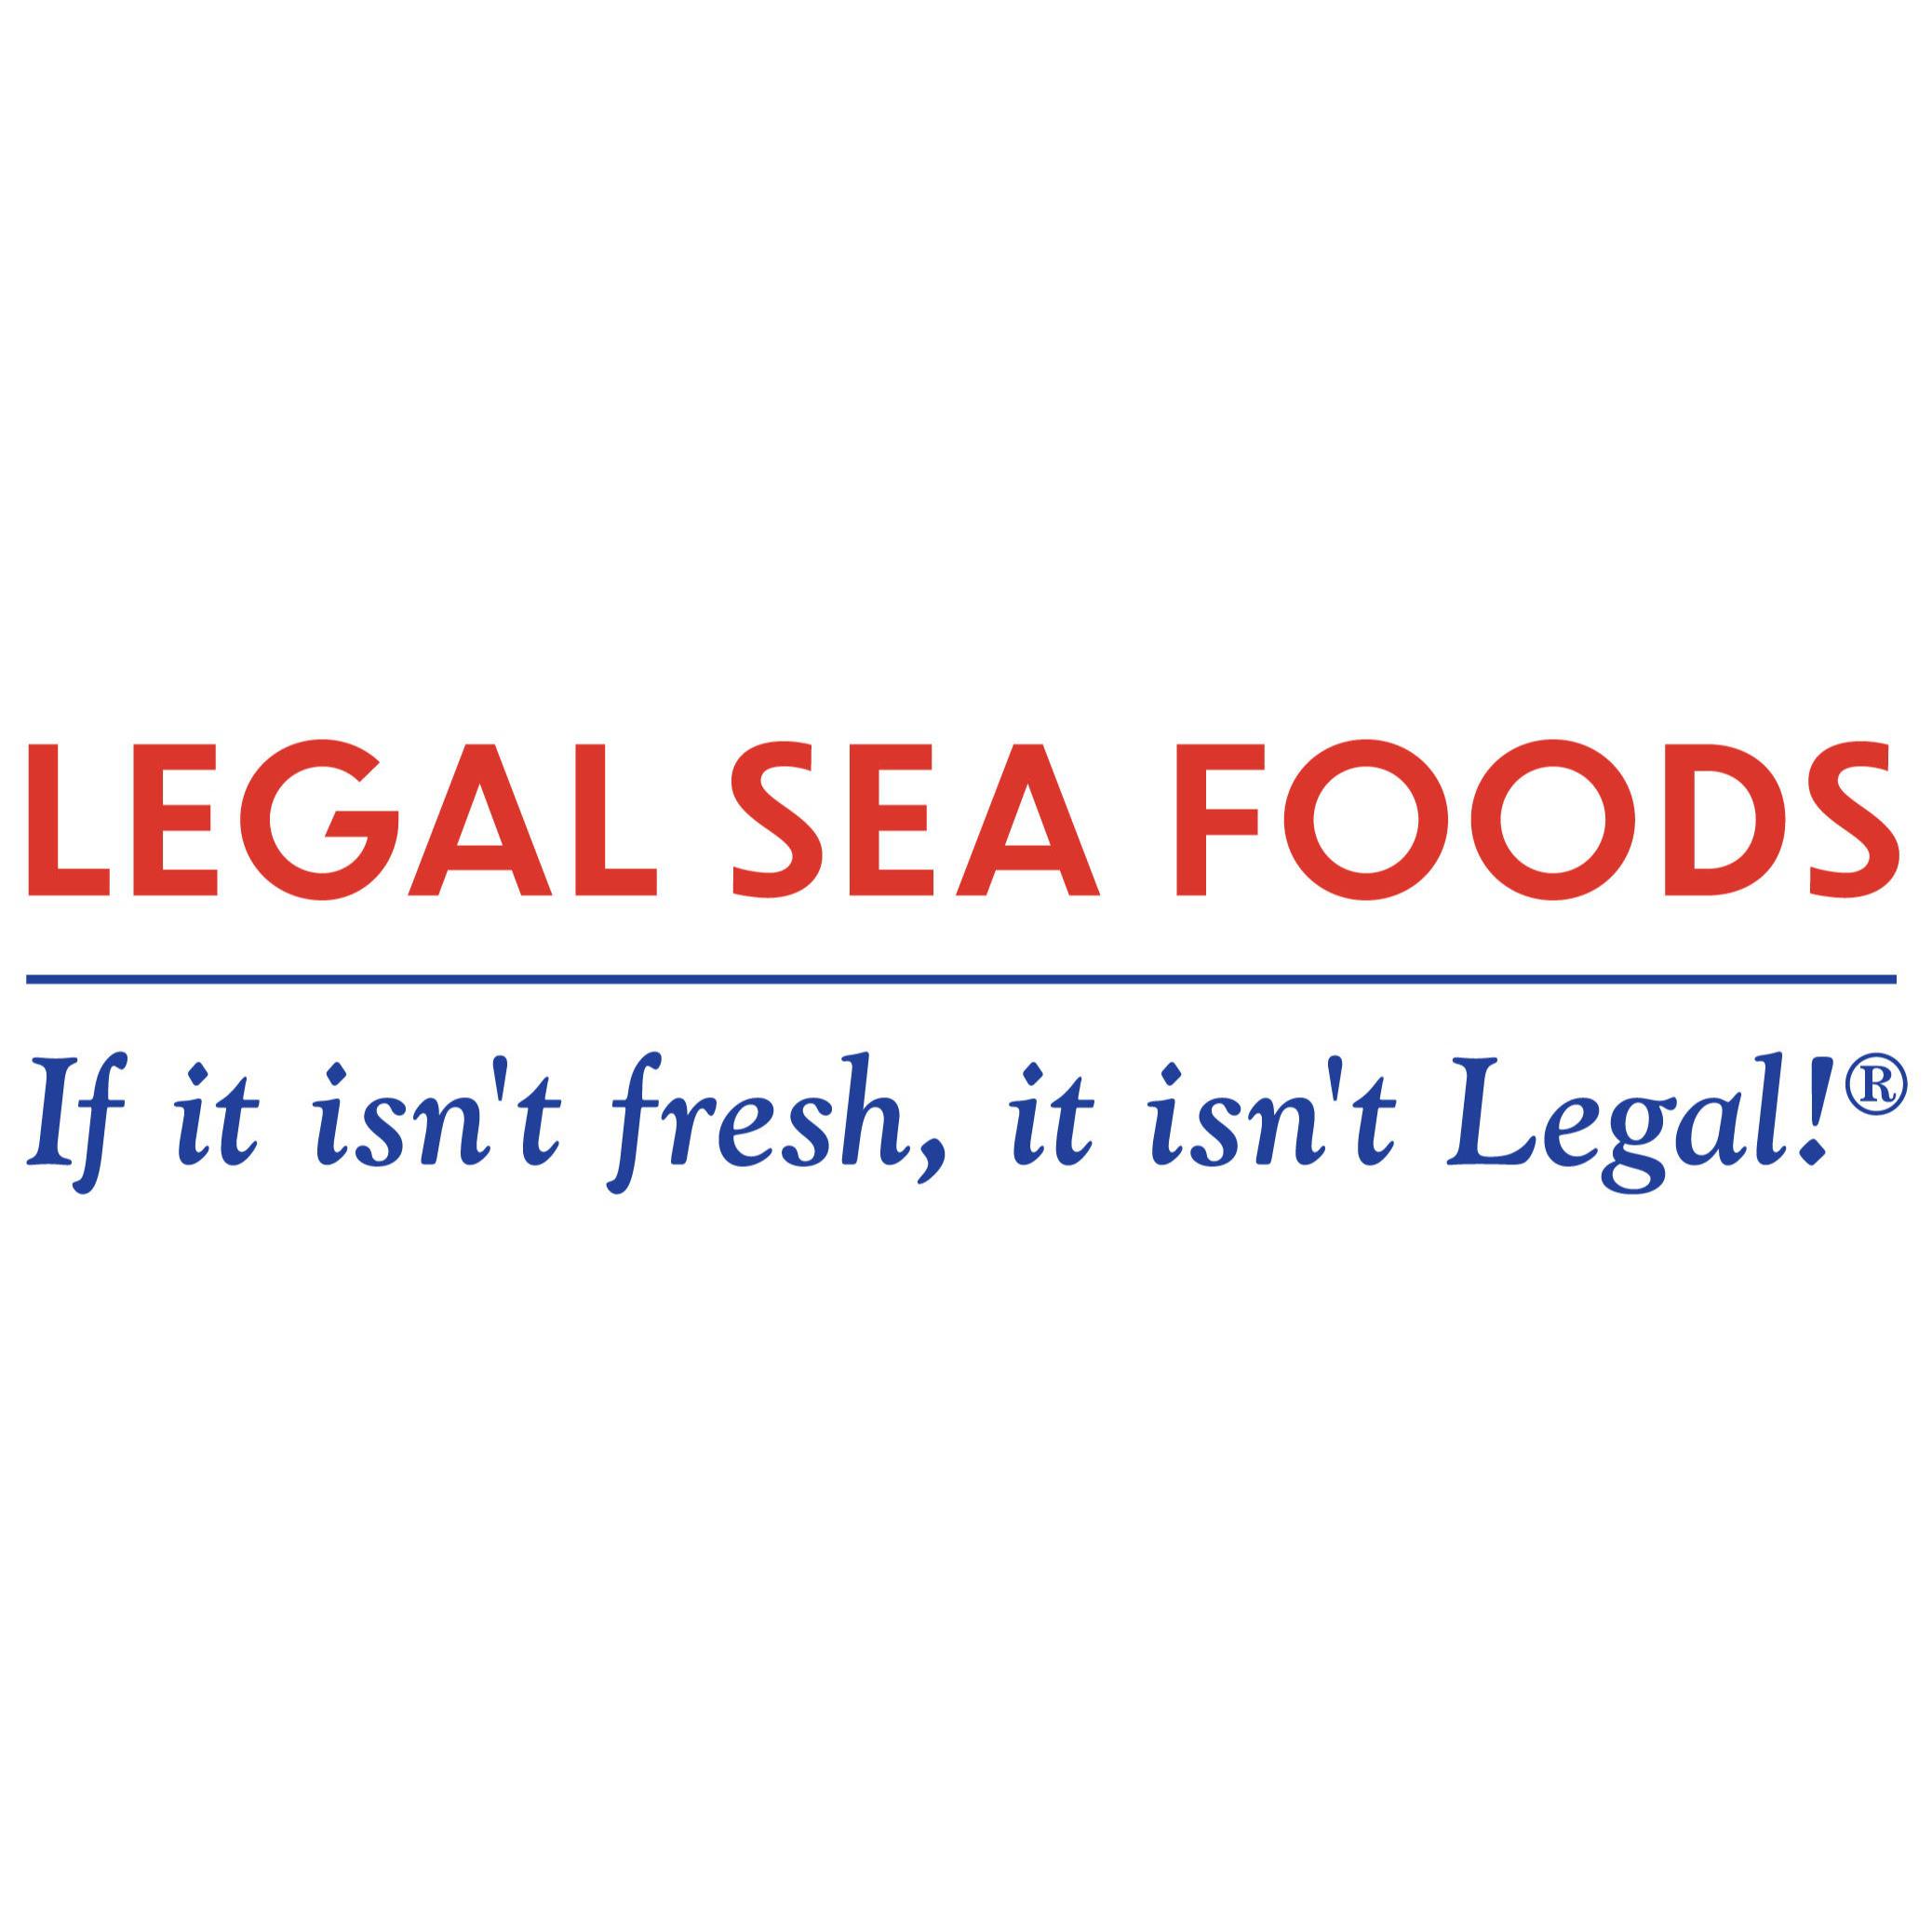 Legal Sea Foods - Copley Place - Boston, MA 02116 - (617)266-7775 | ShowMeLocal.com